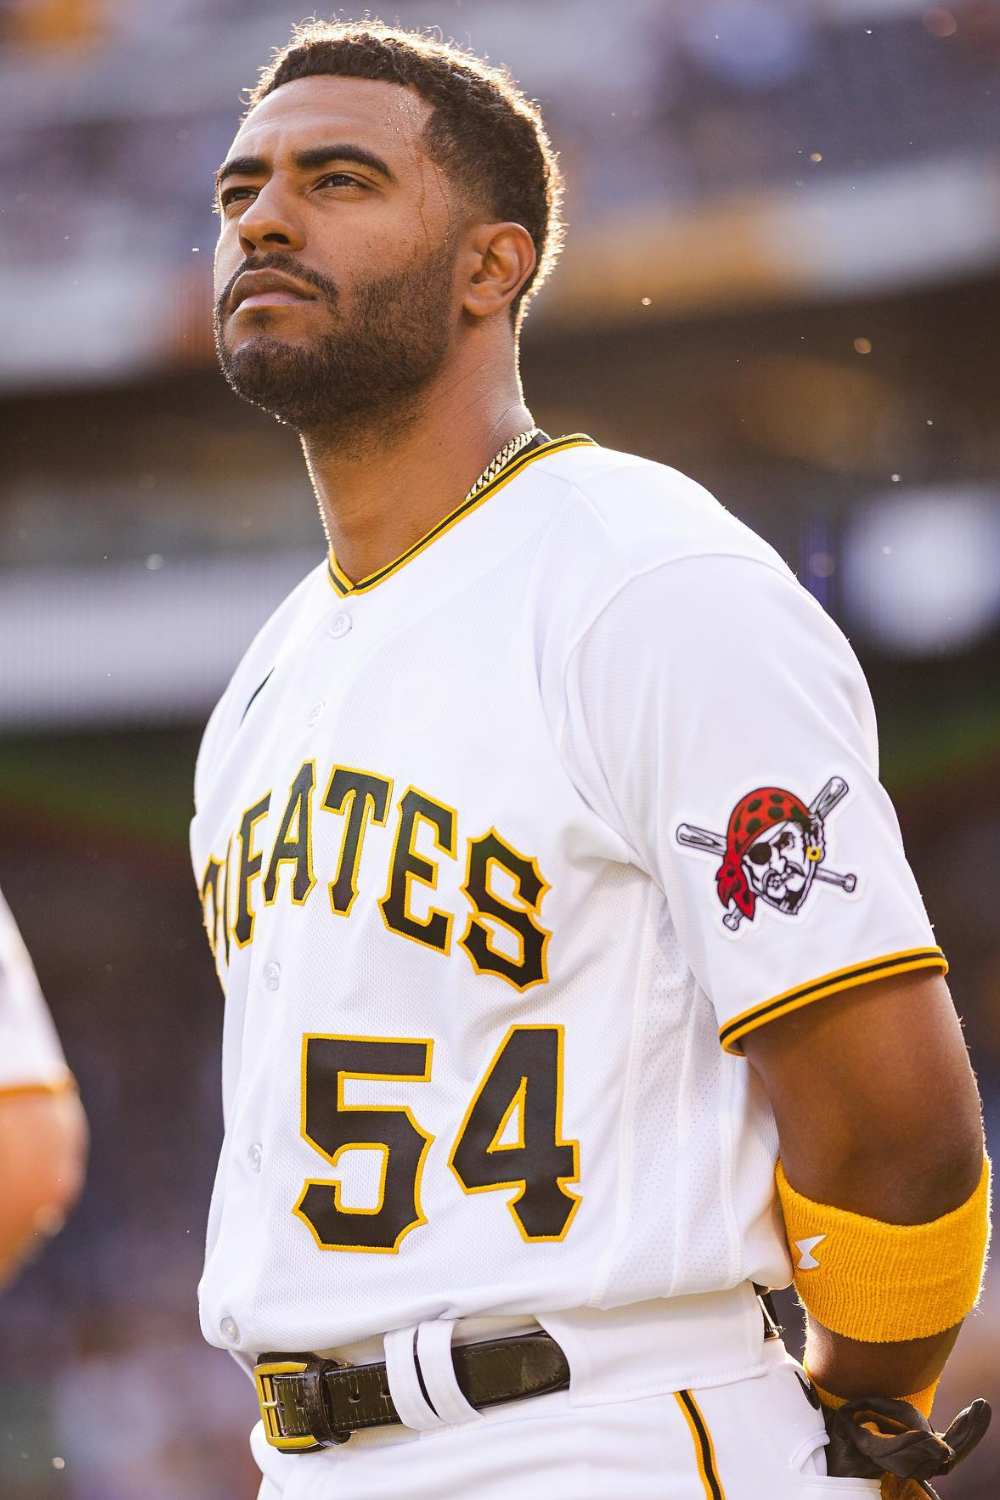 Josh Palacios, A Professional Baseball Player